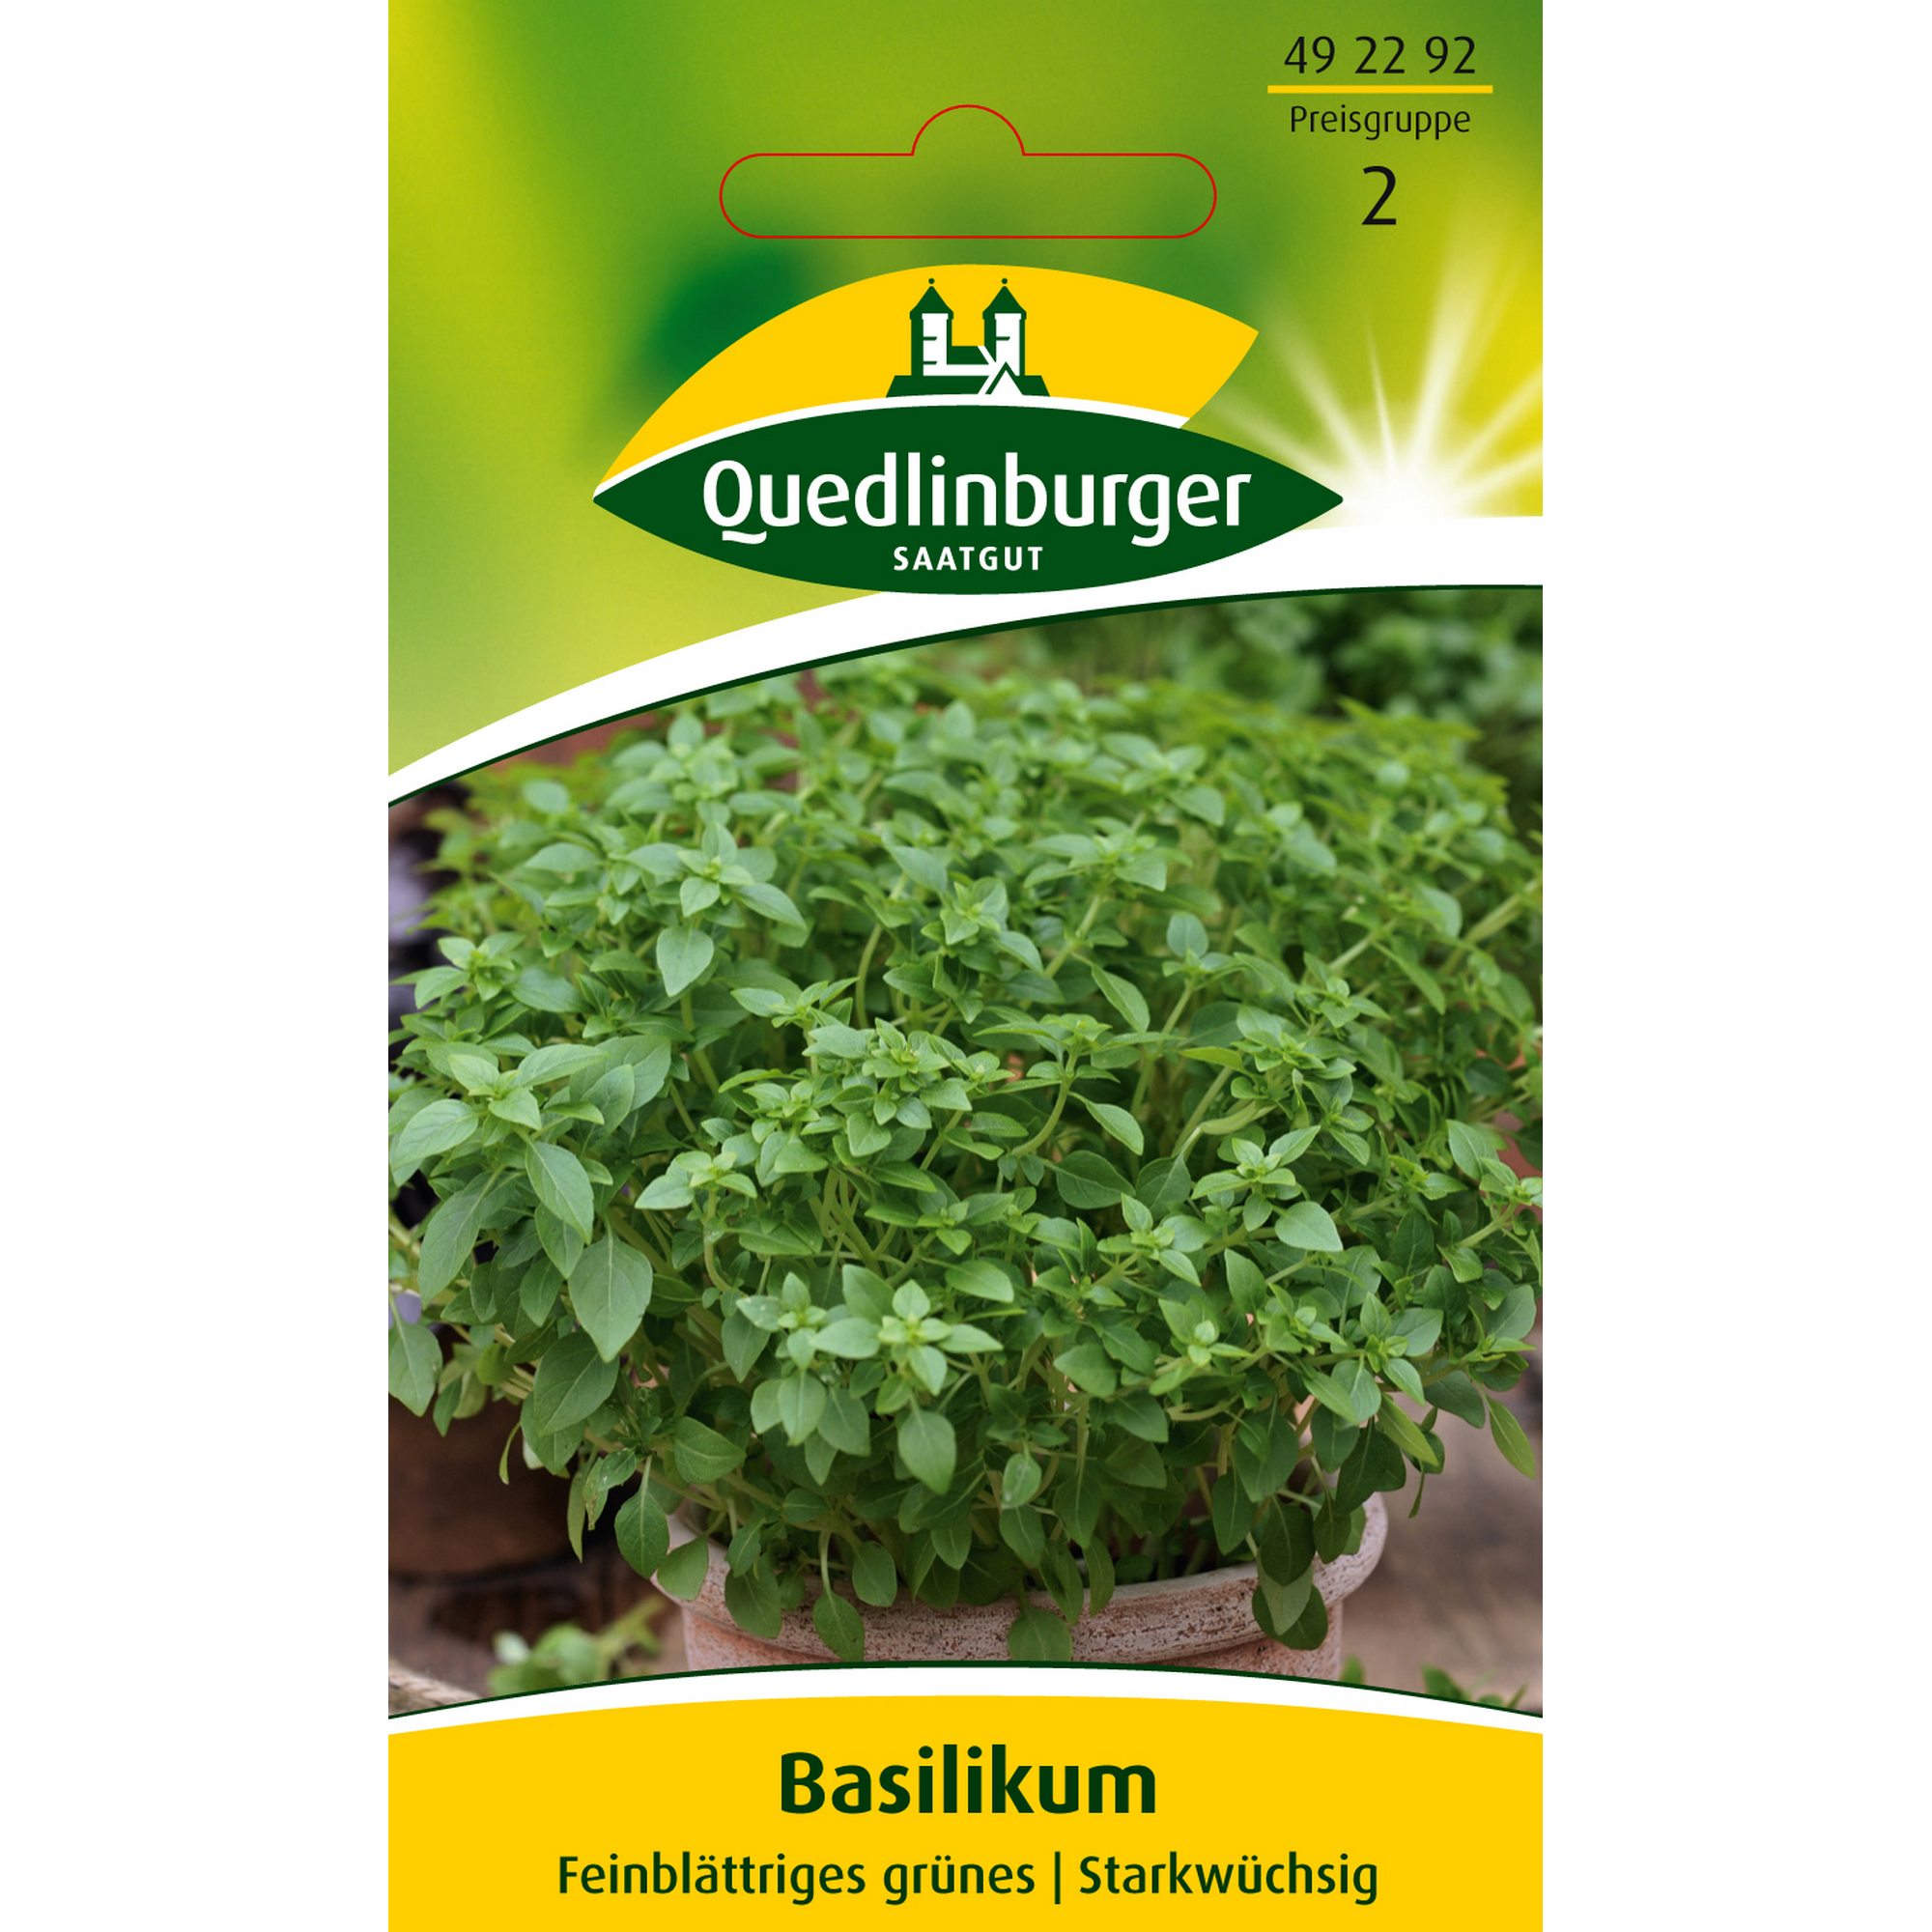 Basilikum feinblättriges grünes + product picture